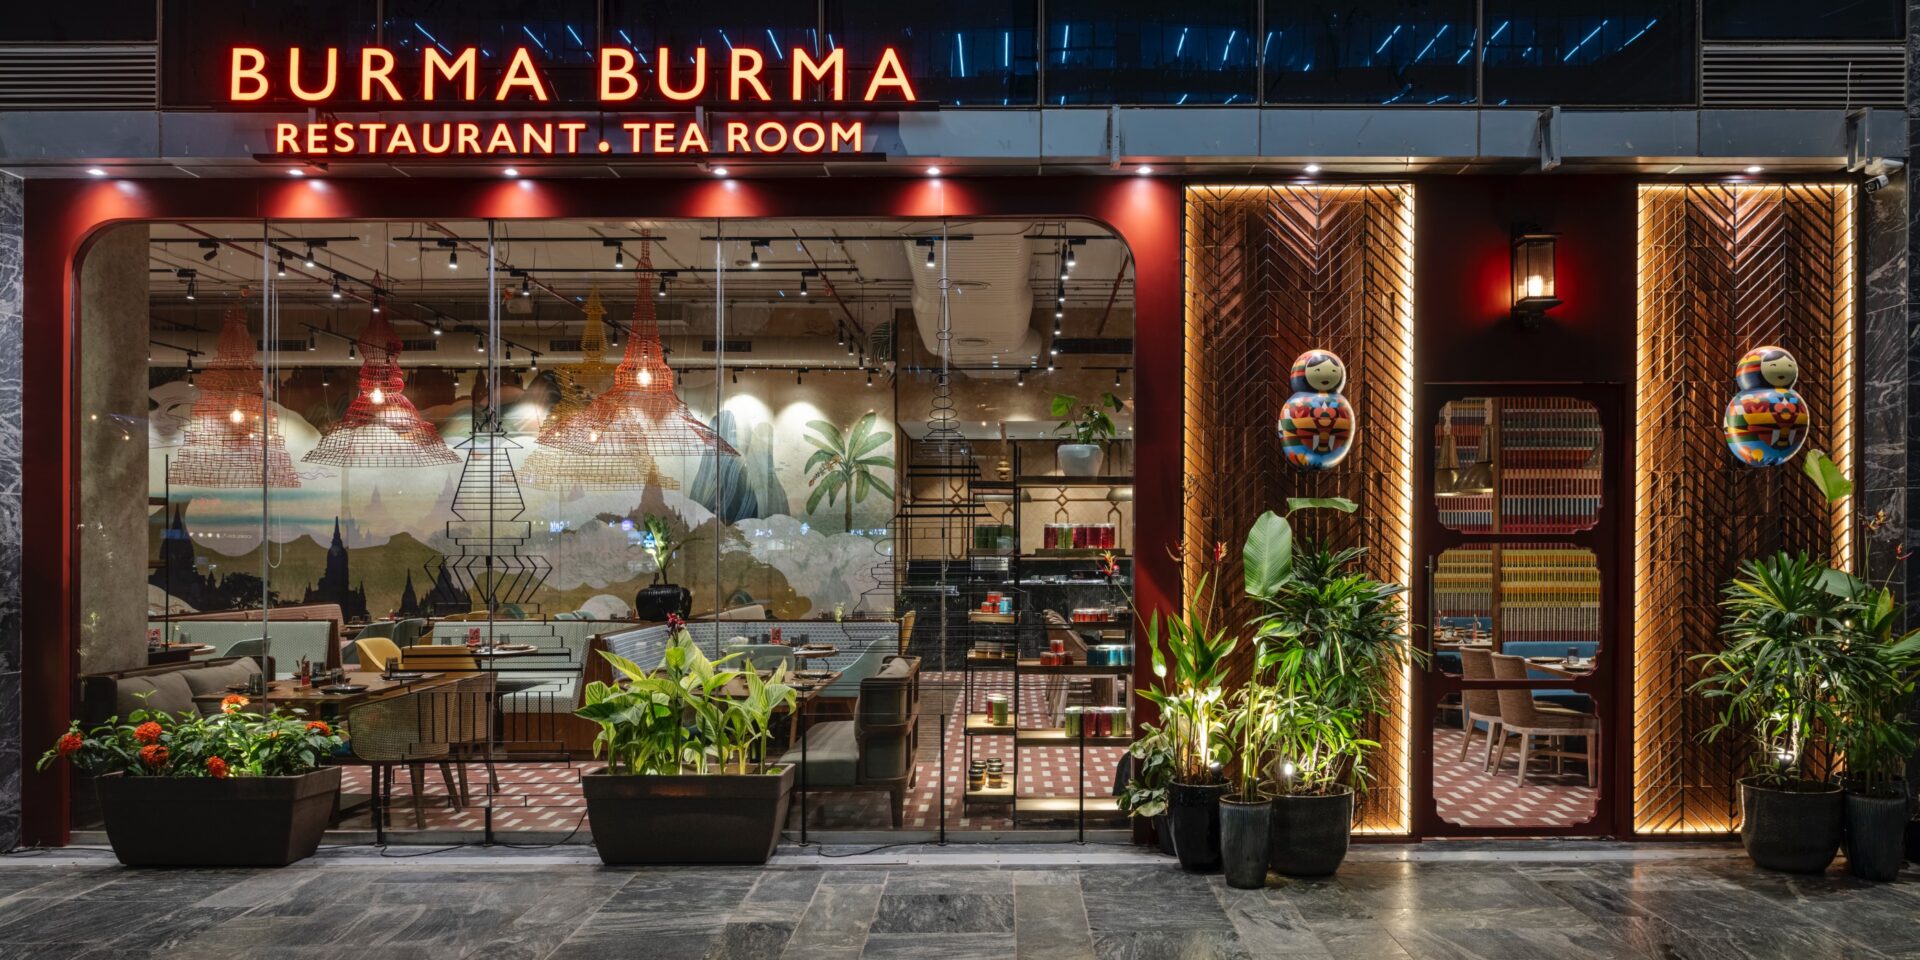 Burma Burma restaurant opens in Hyderabad